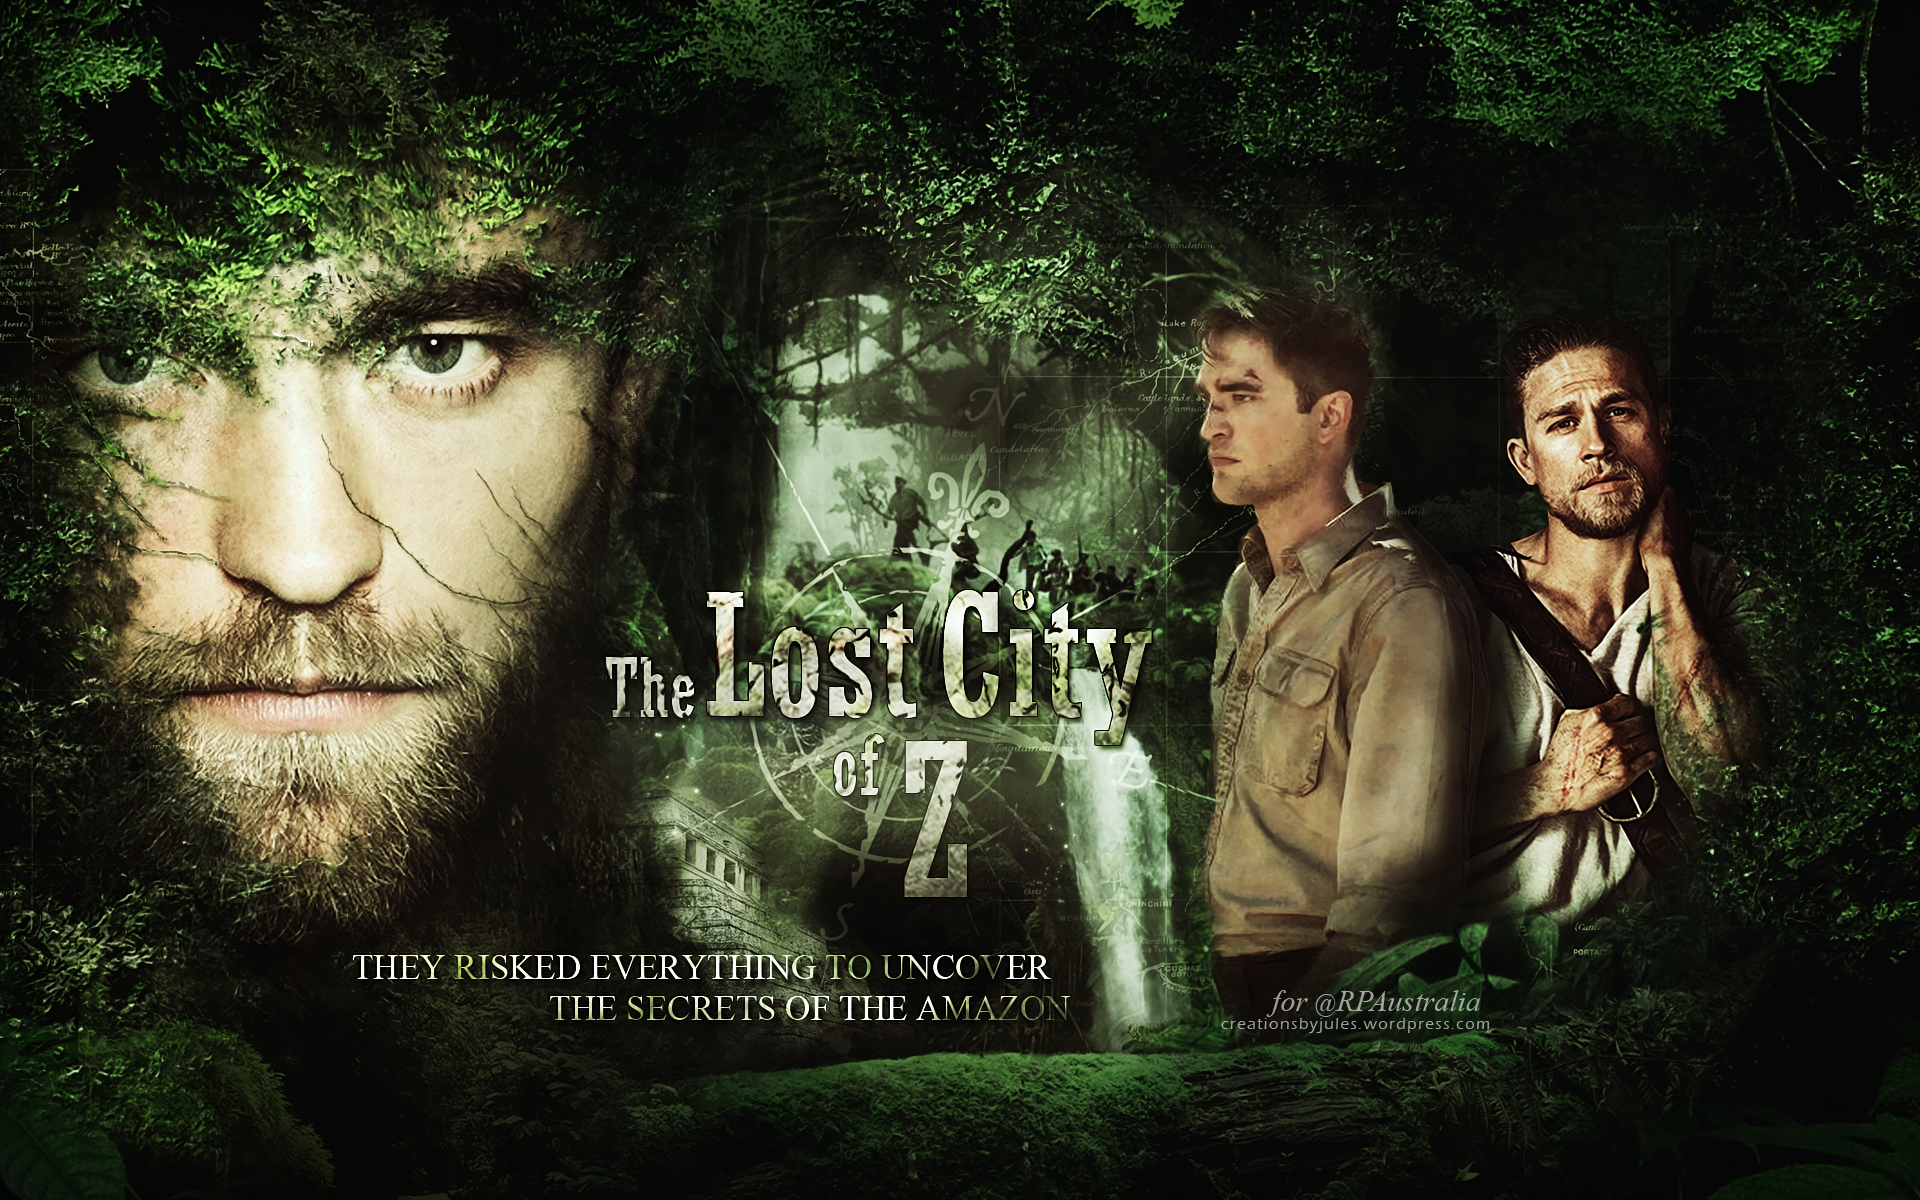 Robert Pattinson Australia Blog Archive Robert Pattinson desktop wallpaper: The Lost City of Z